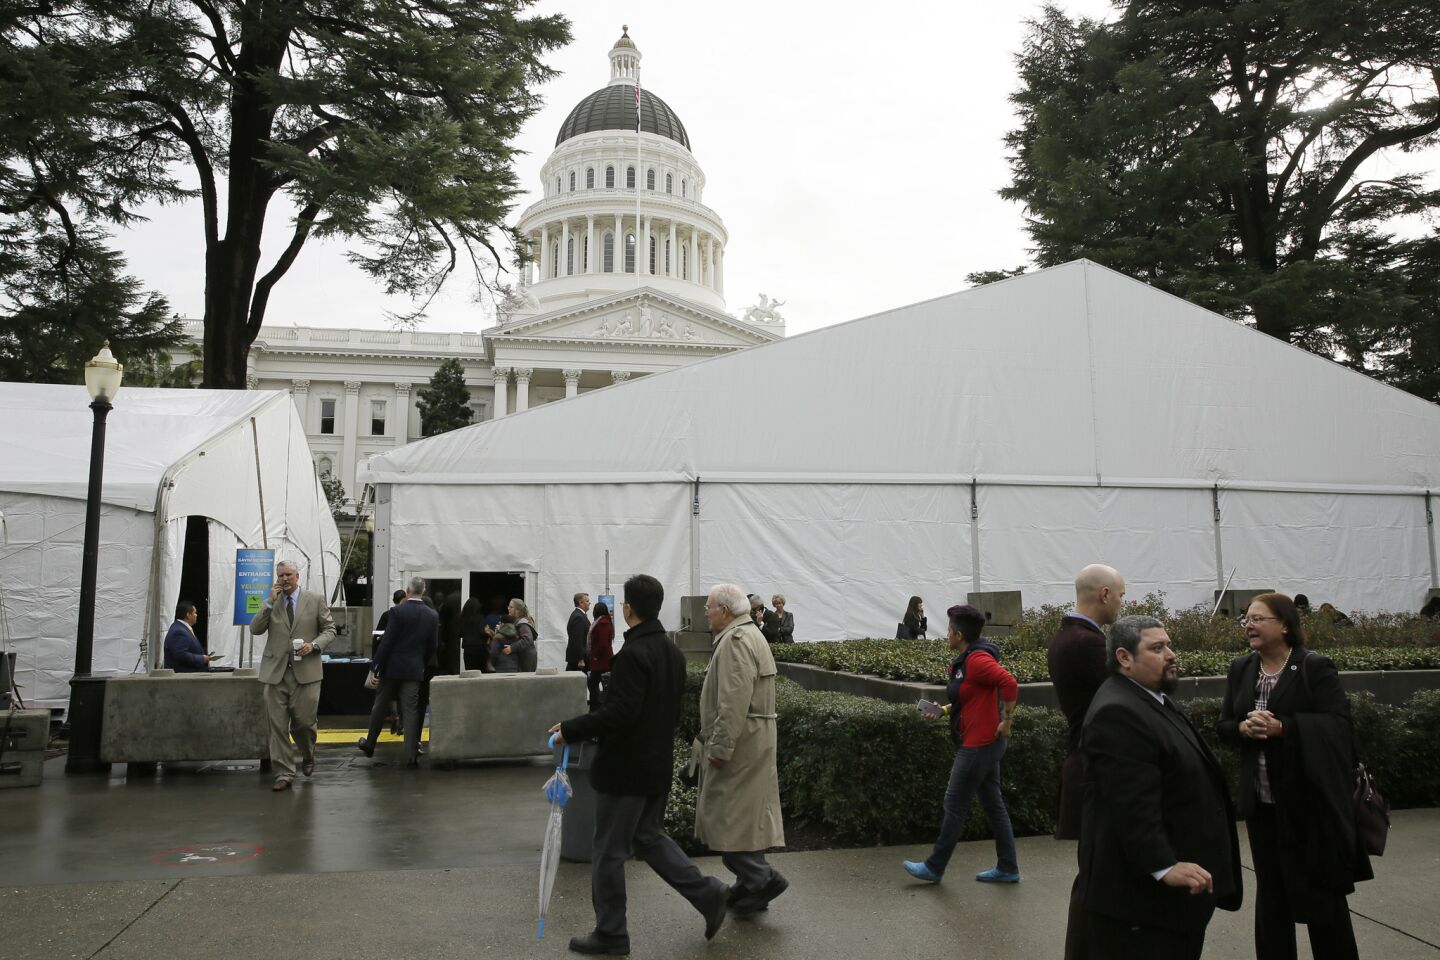 Gavin Newsom becomes California's 40th governor